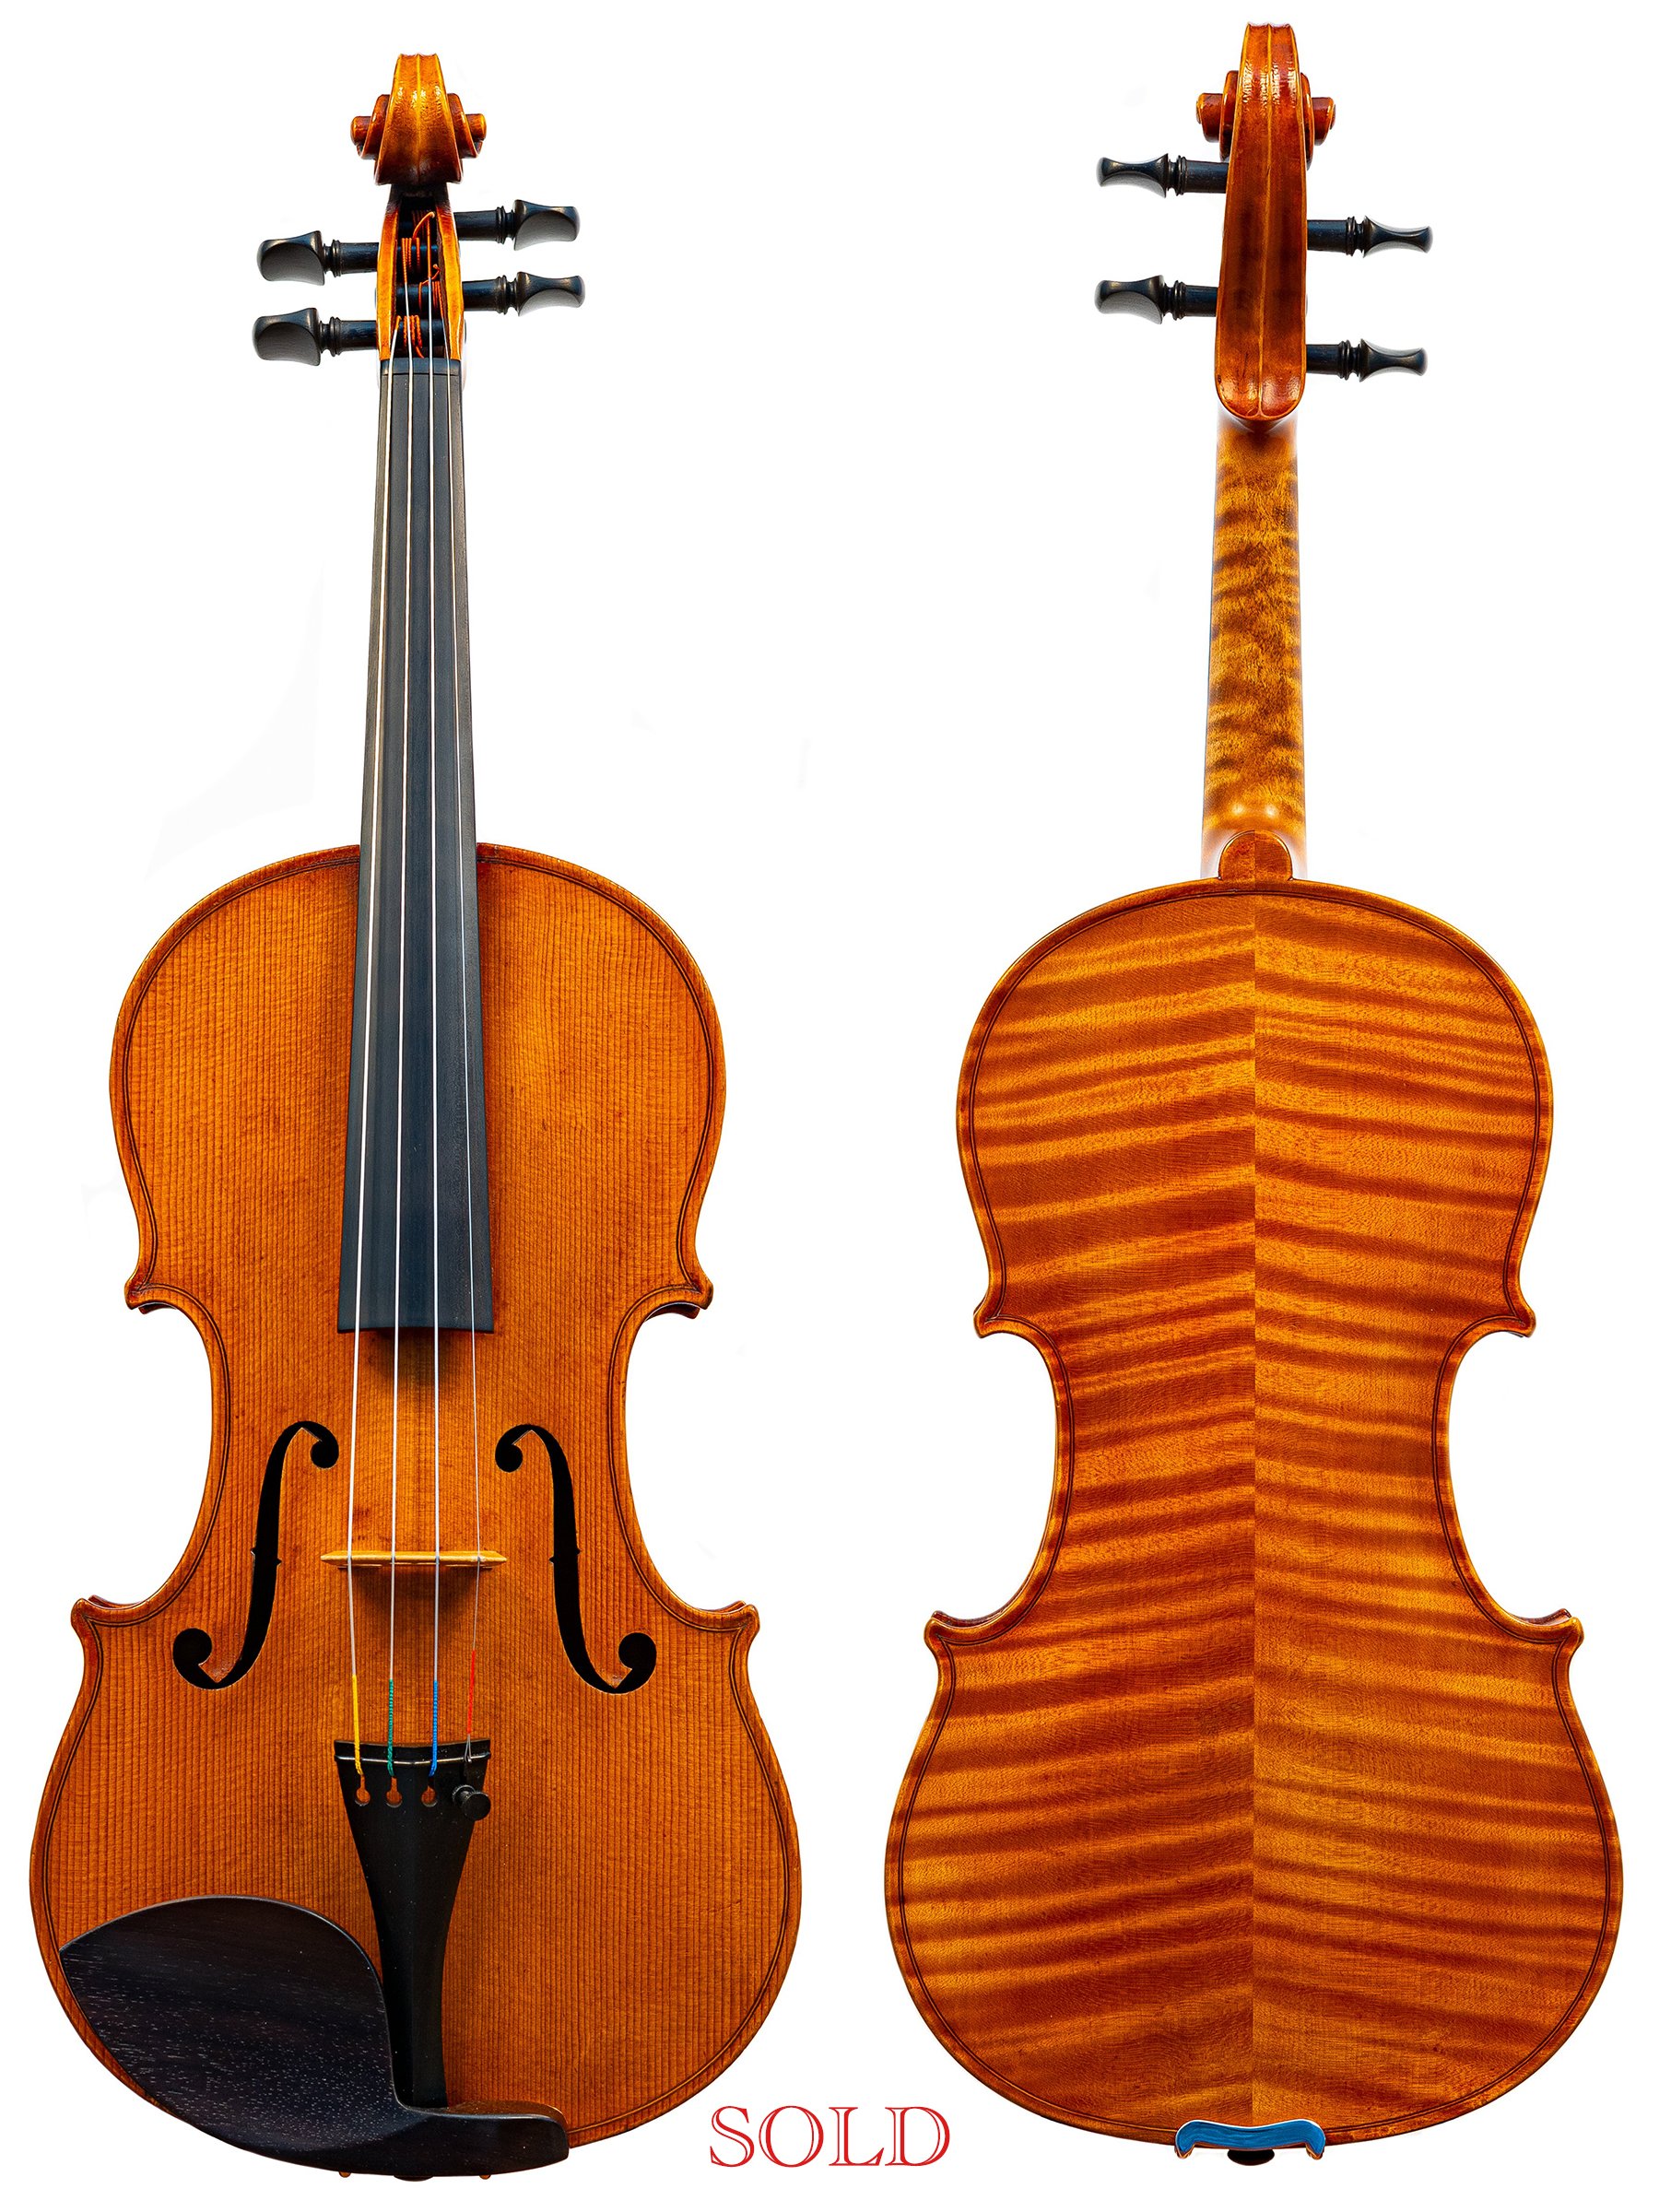 -SOLD- Unlabeled German Violin